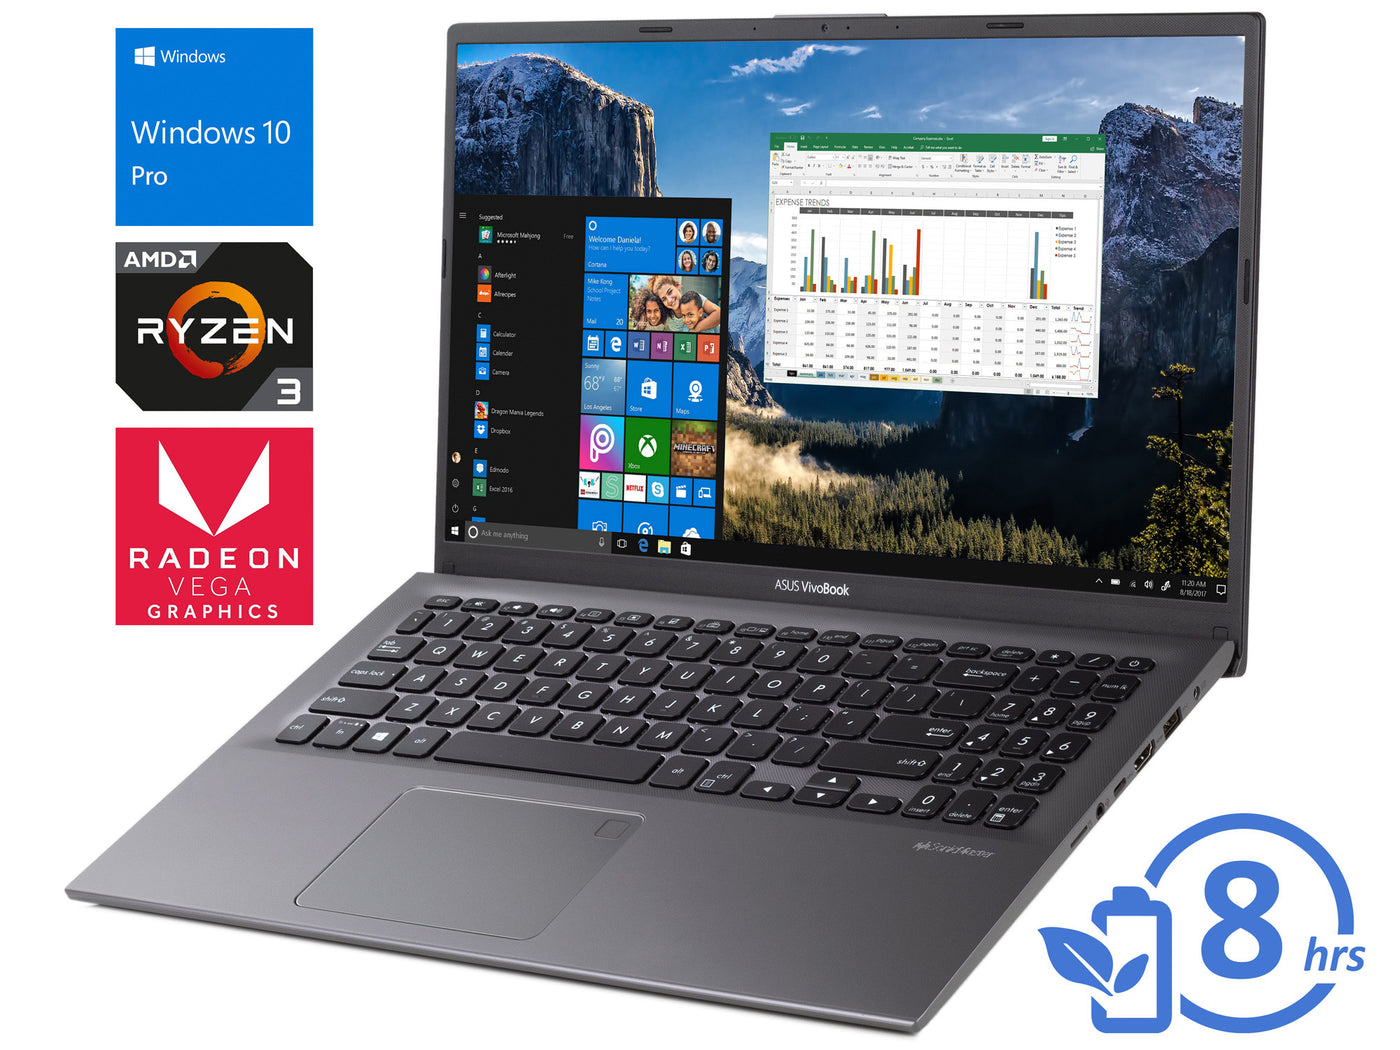 ASUS 2020 VivoBook 15 15.6 Inch FHD 1080P Laptop (AMD Ryzen 3 3200U up to  3.5GHz, 8GB DDR4 RAM, 256GB SSD, AMD Radeon Vega 3, Backlit Keyboard, FP